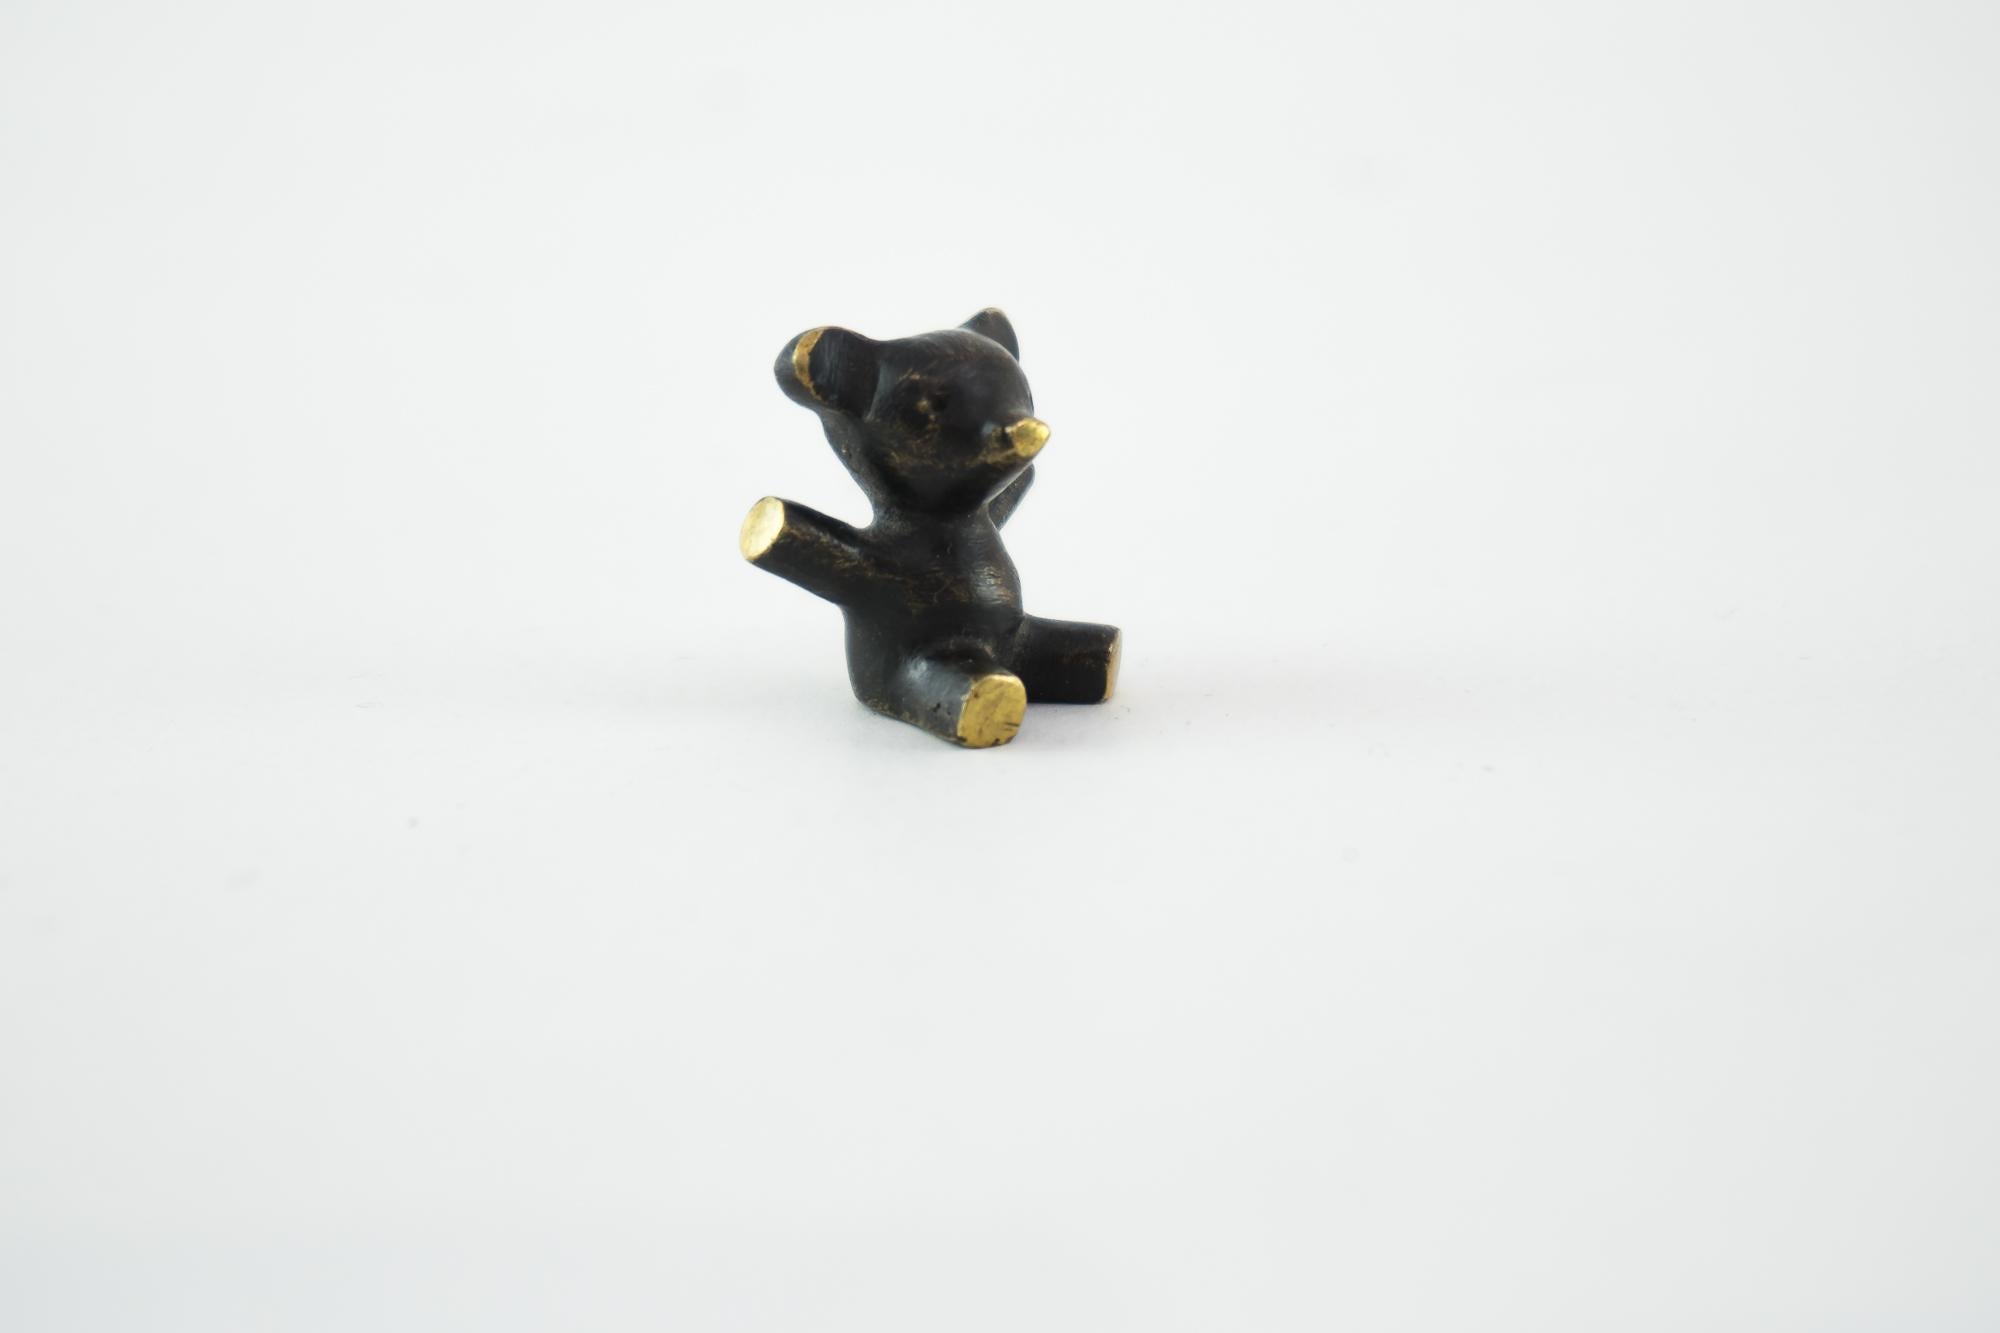 Petite figurine d'ours Walter Bosse, Vienne, vers 1950
Etat original.